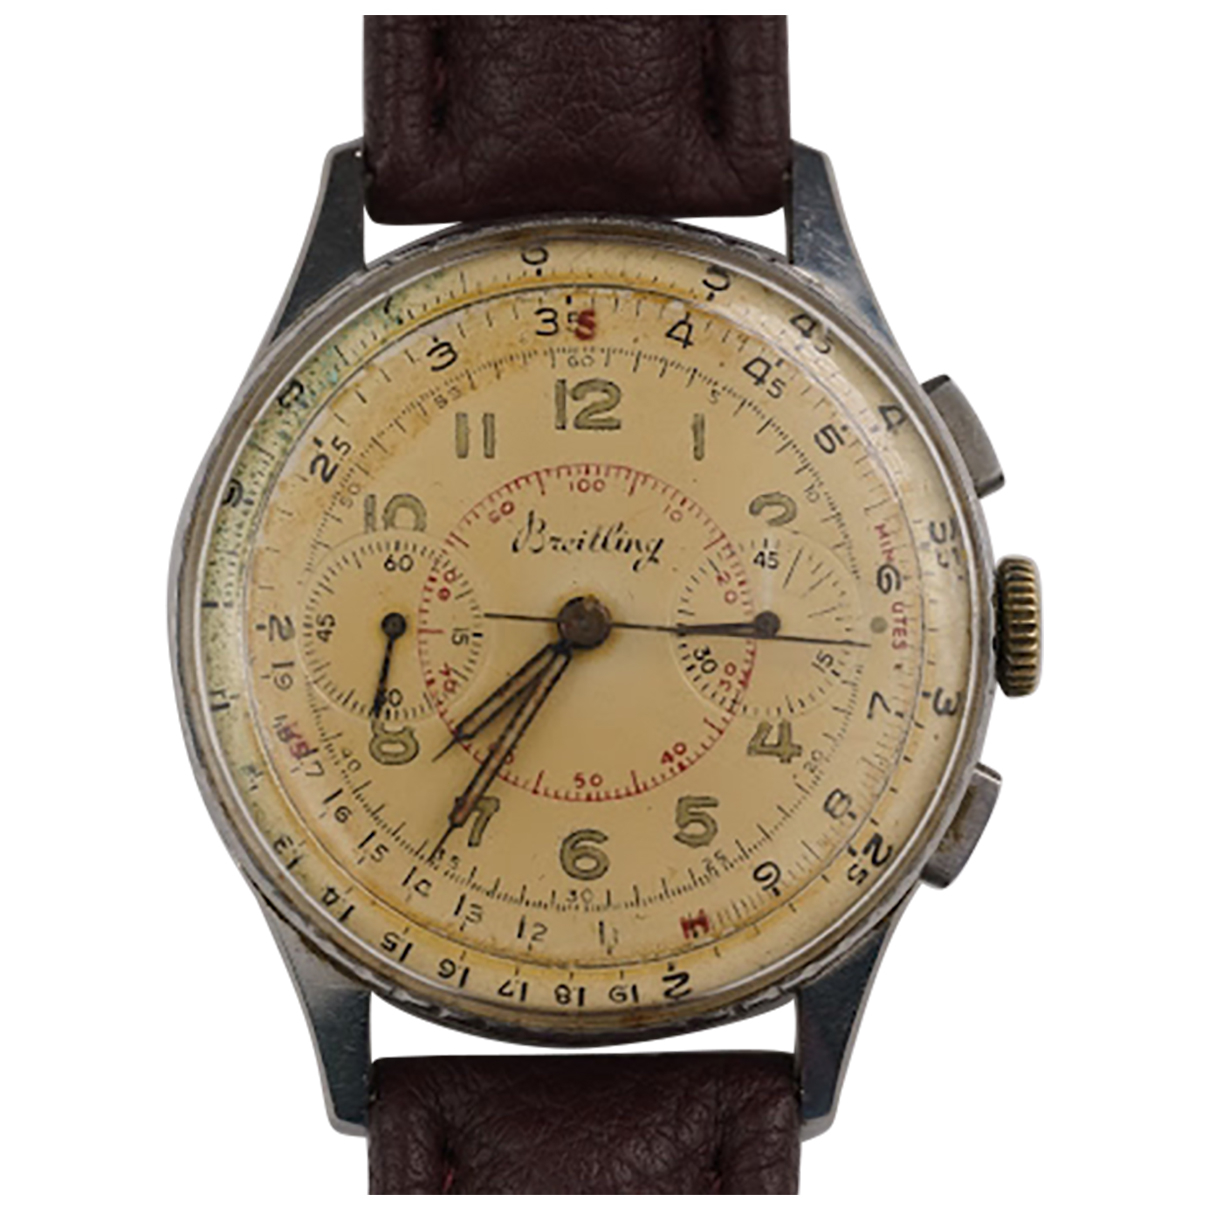 image of Breitling Chronomat watch